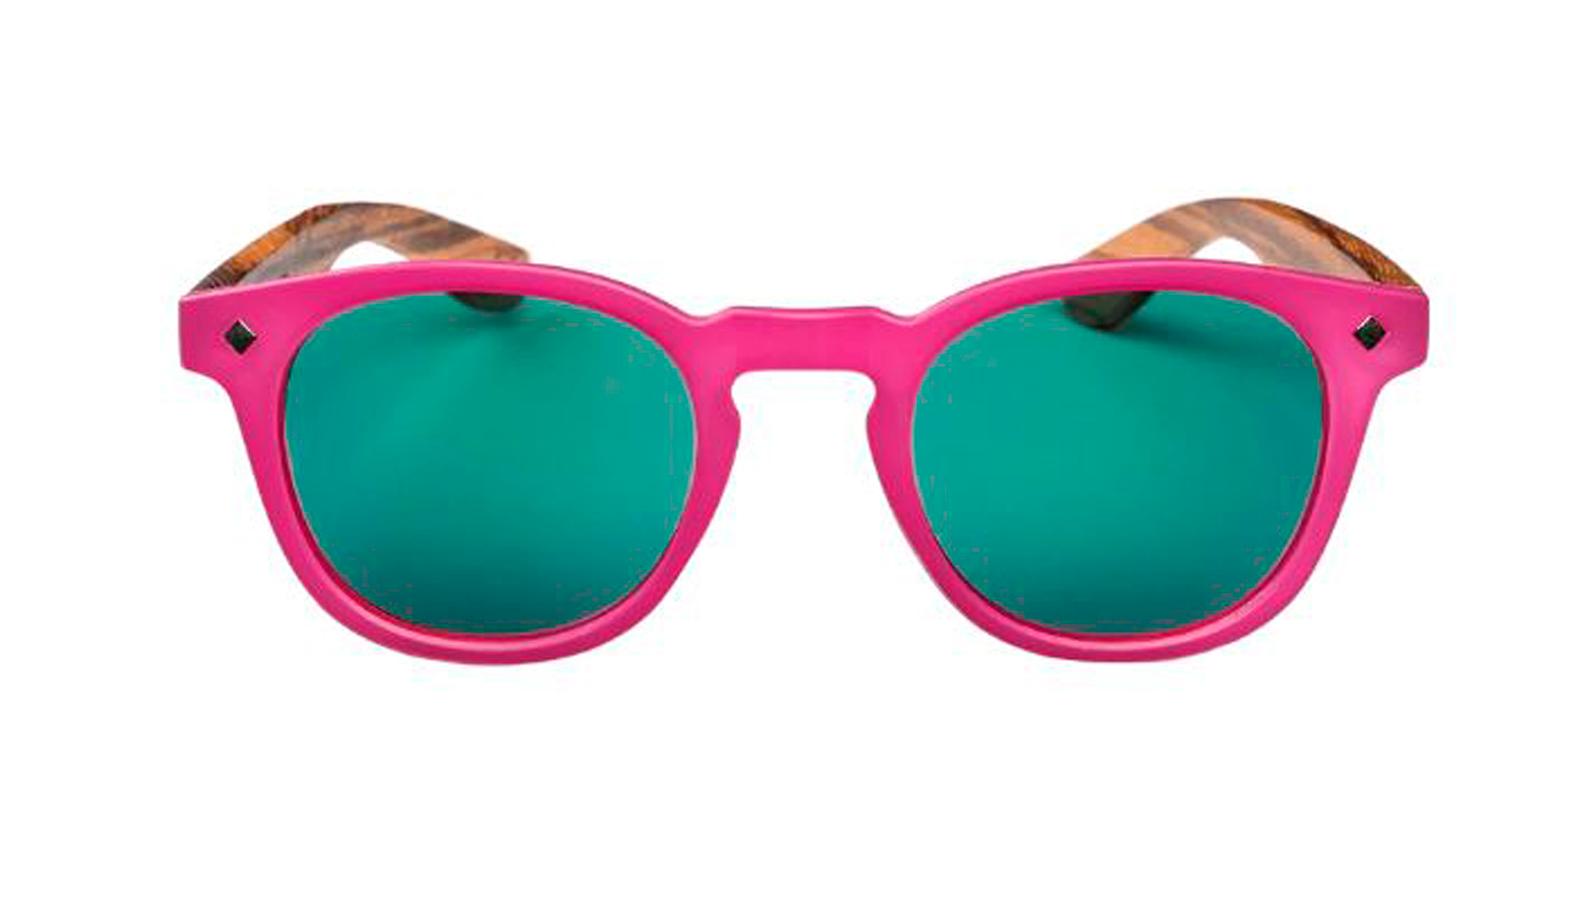 Kindersonnenbrille pink